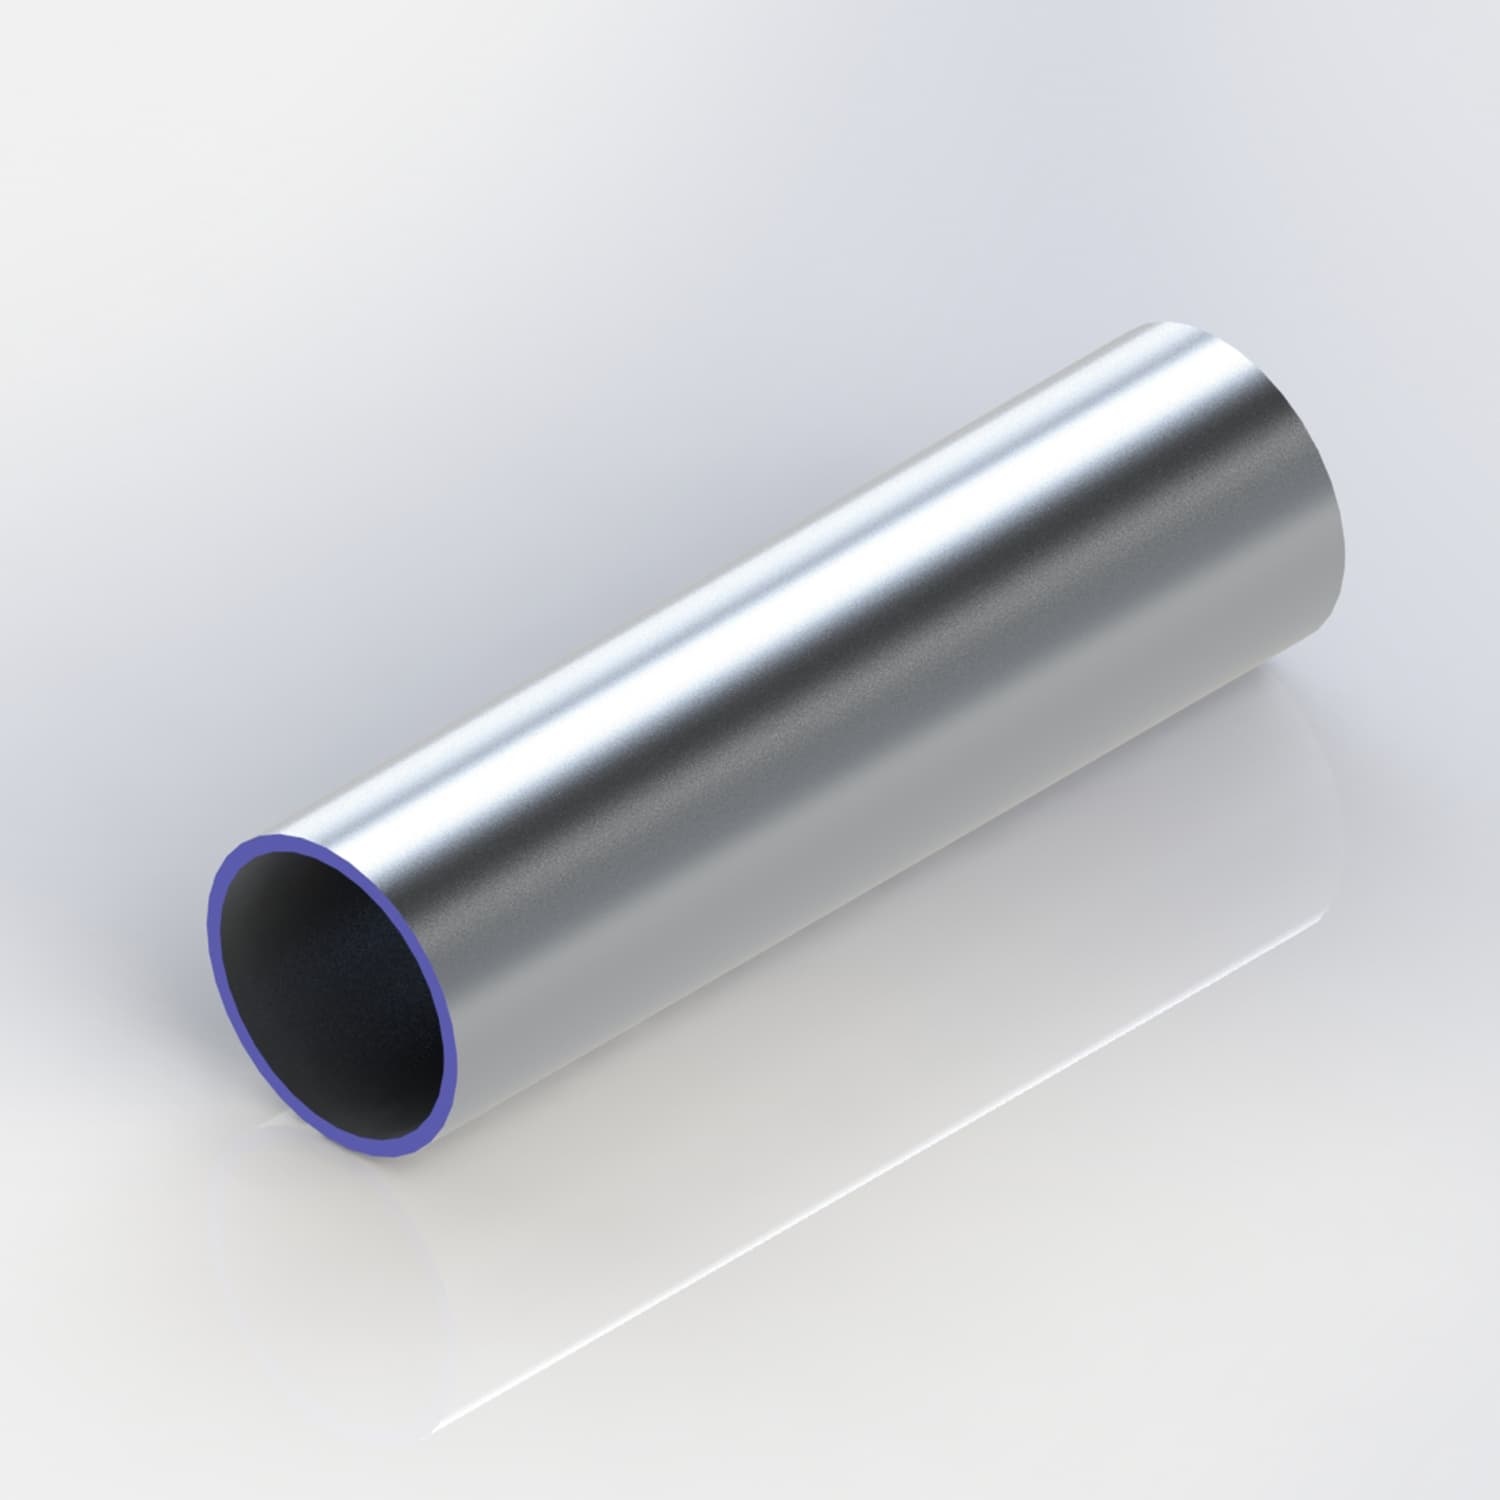  Aluminium buis - 50x2,5 mm - 6060 T6 - ALU buisprofiel - koker rond - AL pijp - brut - blank - onbehandeld